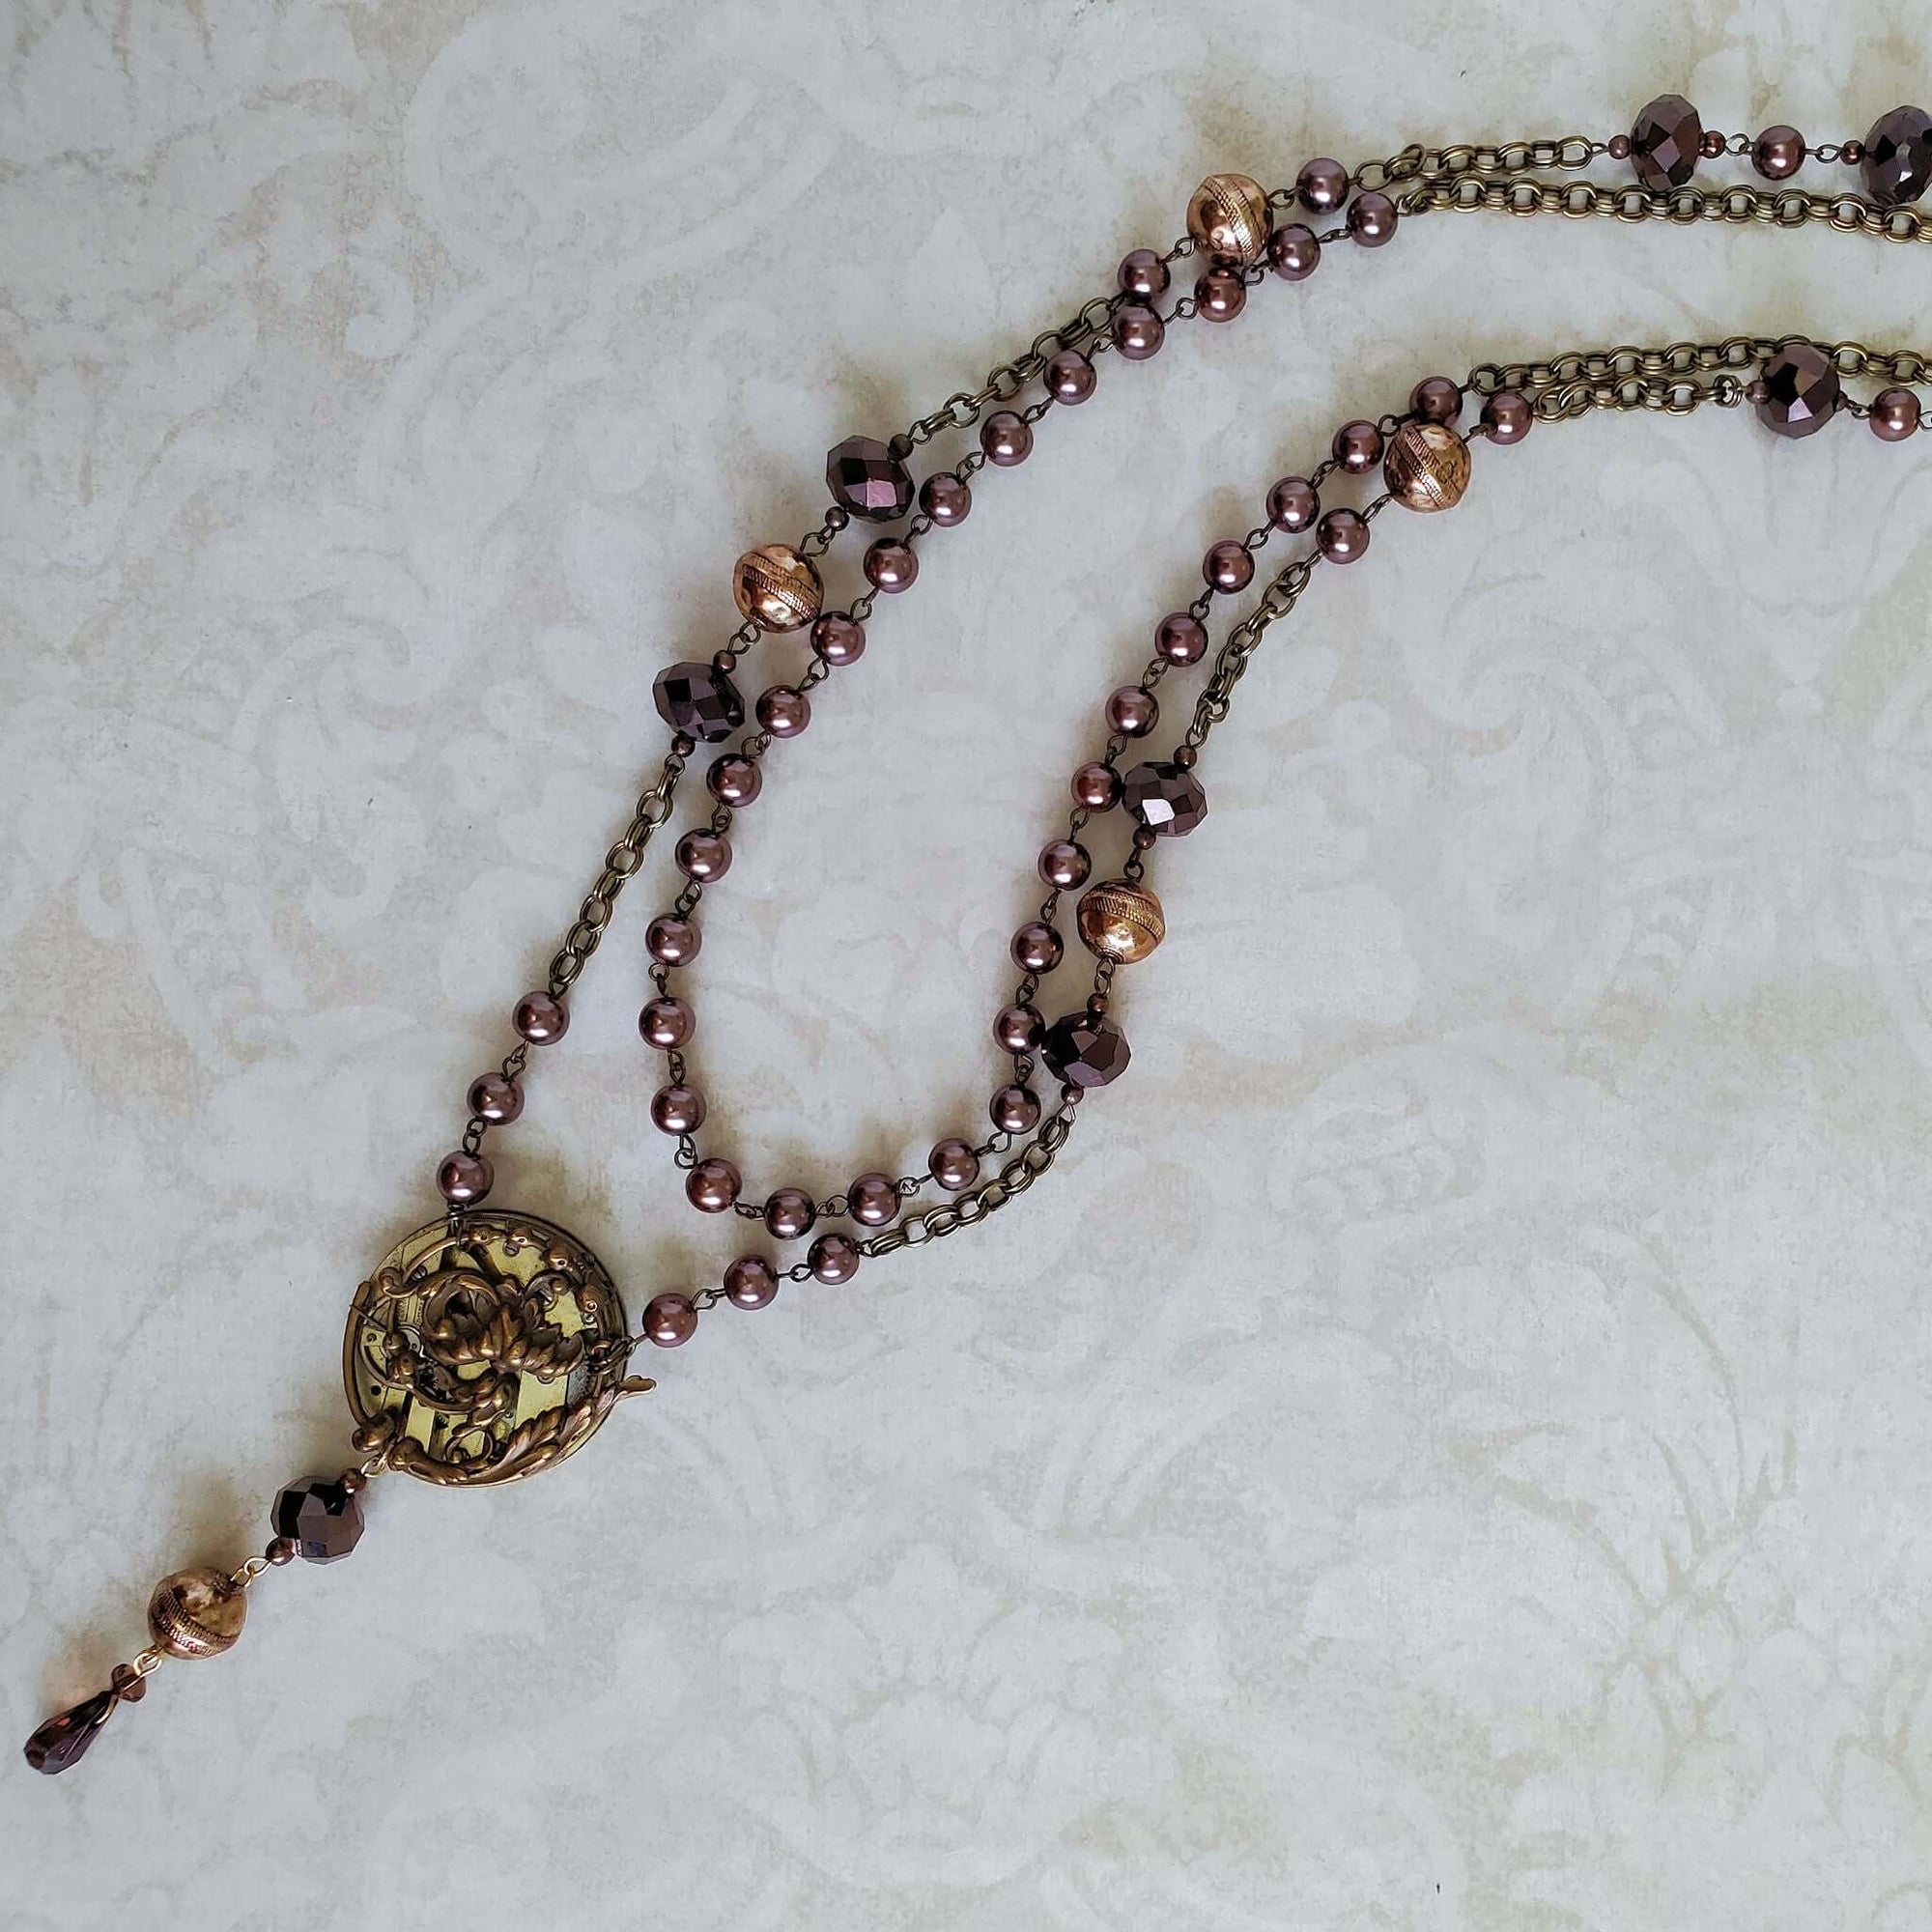 Antique Pocket Watch Assemblage Necklace